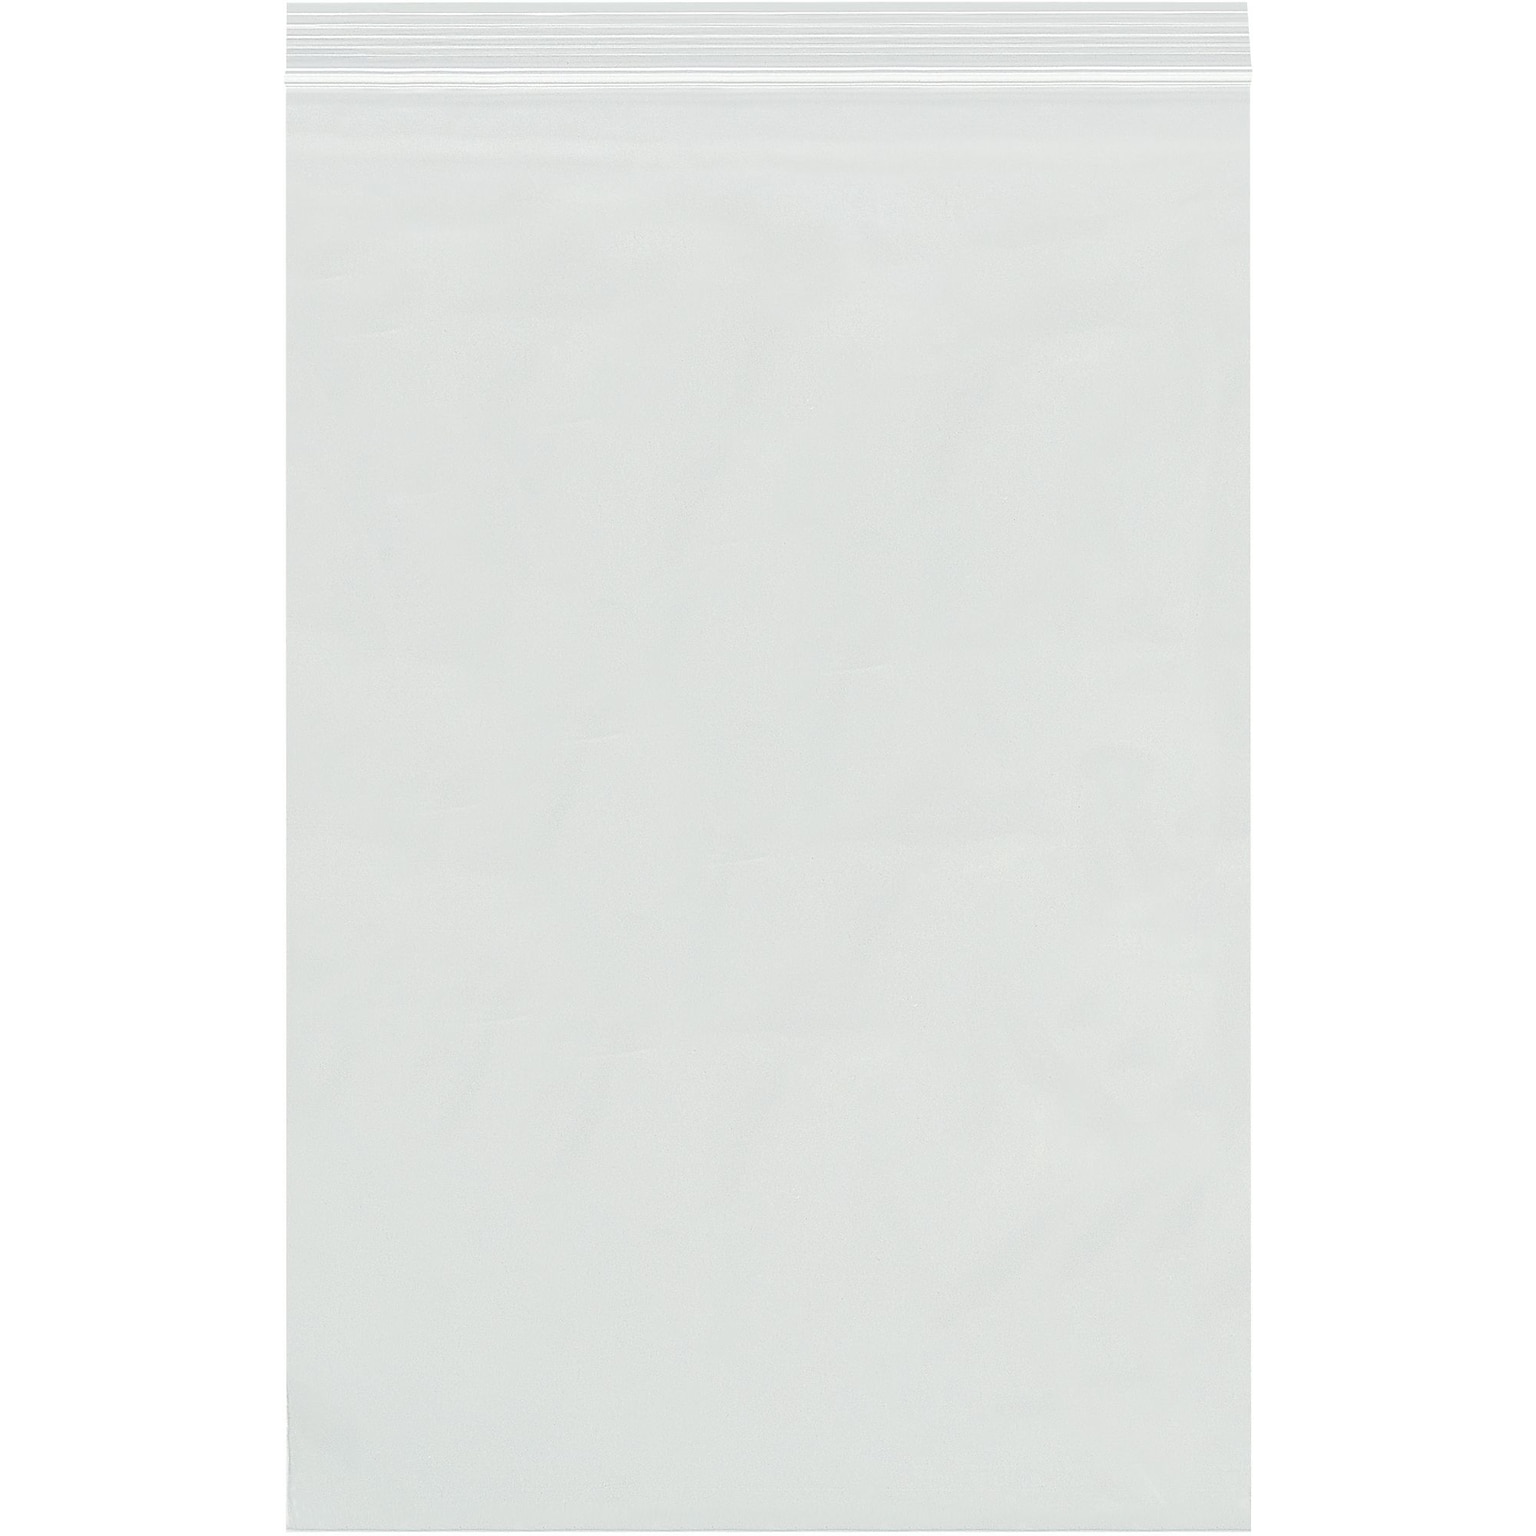 5W x 9L Reclosable Poly Bag, 4.0 Mil, 1000/Carton (PB4402)